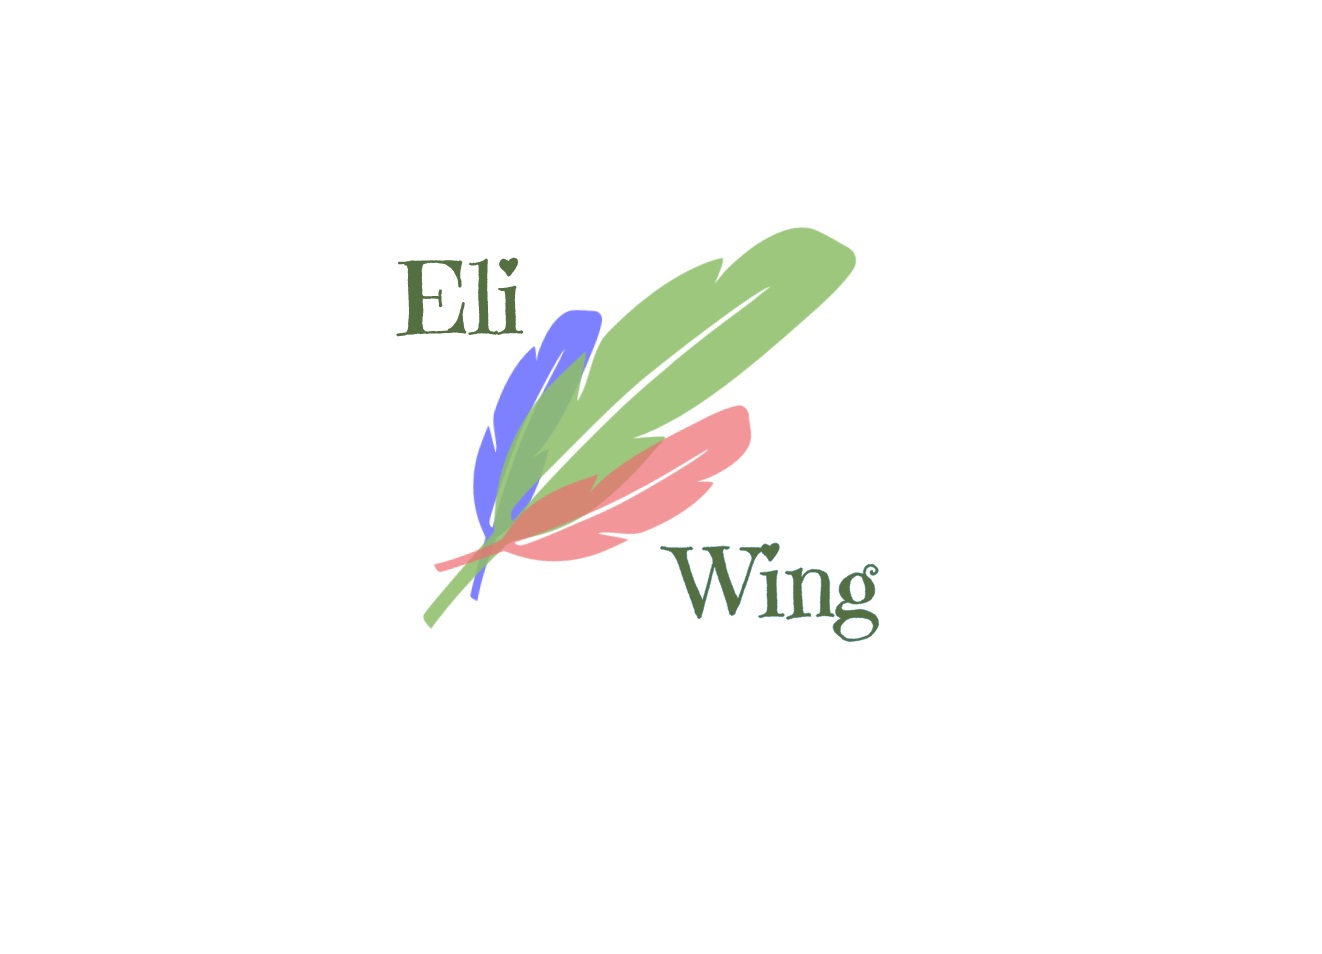 Eli Wing